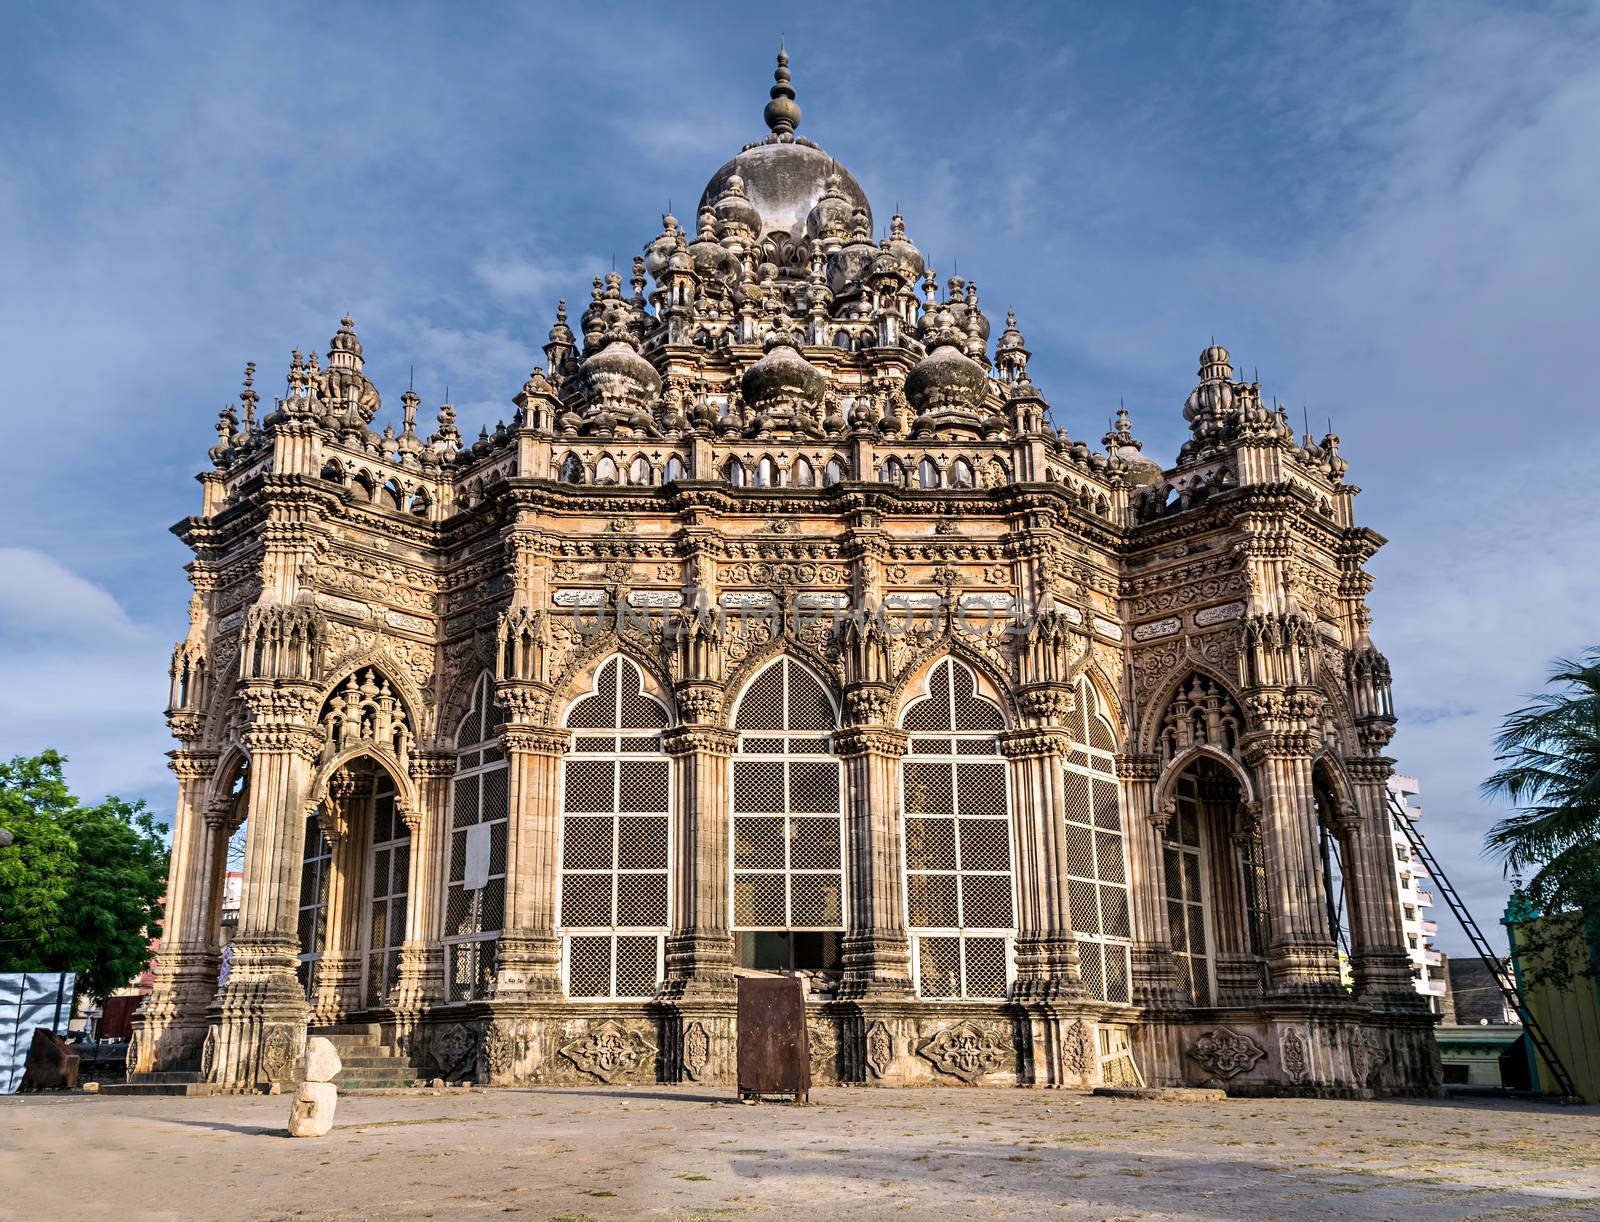 Mahabat Maqbara Palace, also Mausoleum of Bahaduddinbhai Hasainbhai, is a mausoleum in Junagadh,